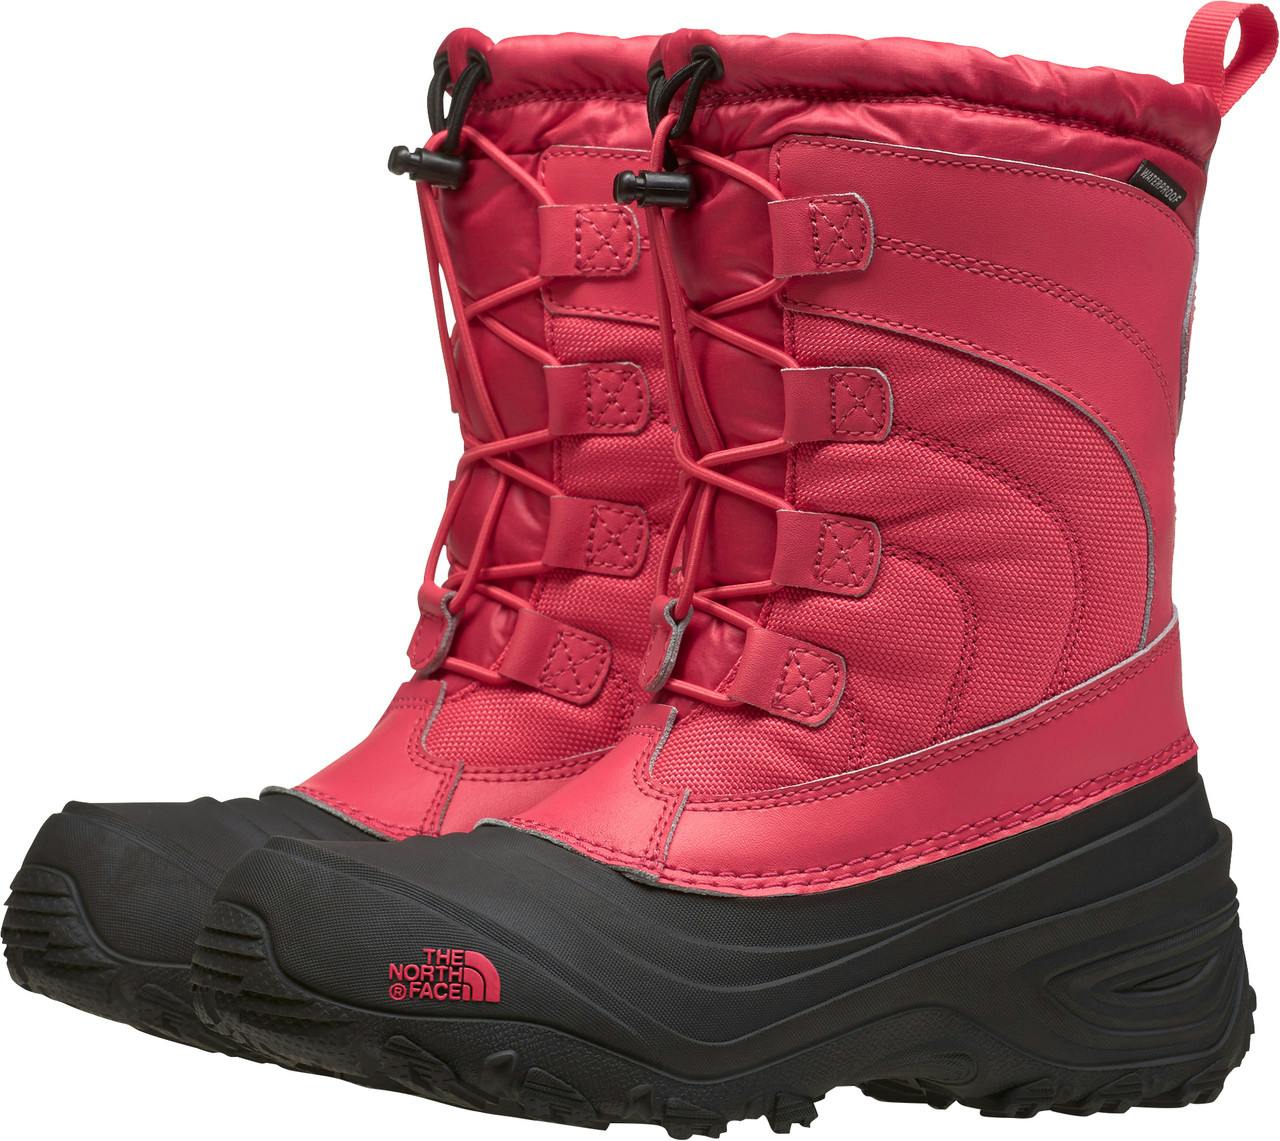 Alpenglow IV Waterproof Winter Boots Paradise Pink/TNF Black